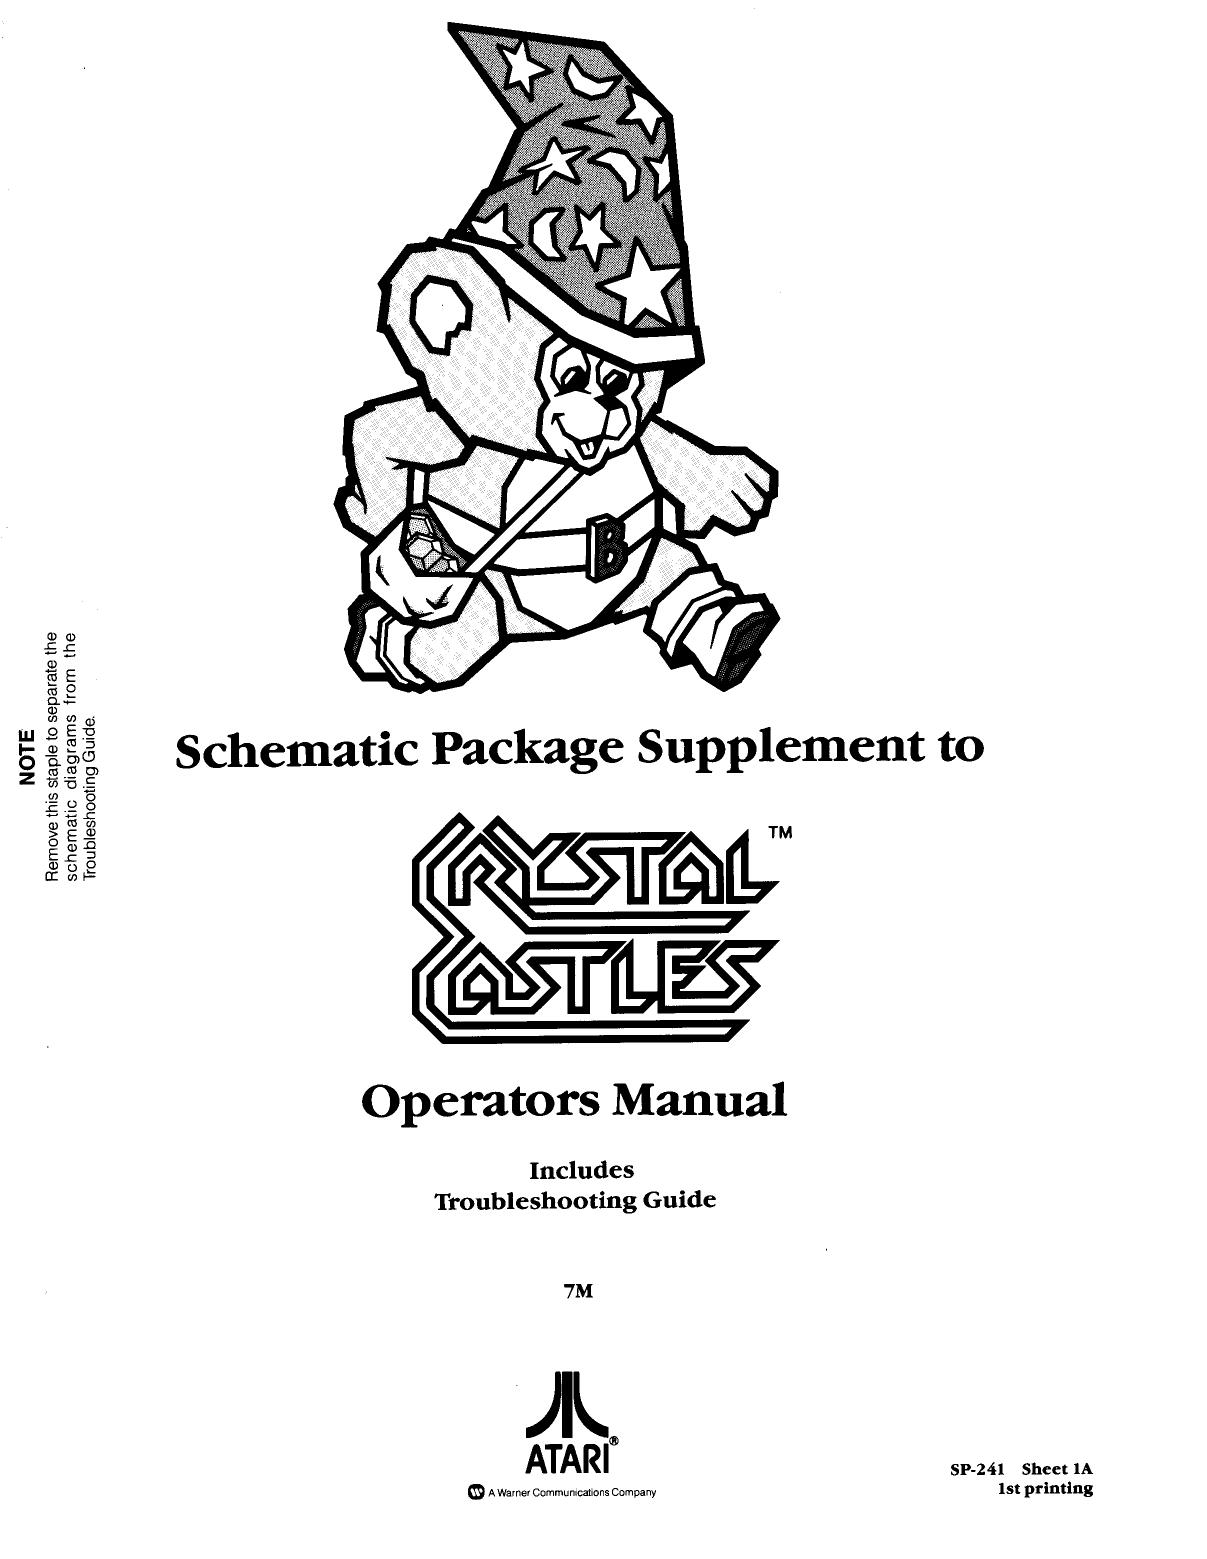 Crystal Castles (SP-241 1st Printing) (Schematic Package) (U)